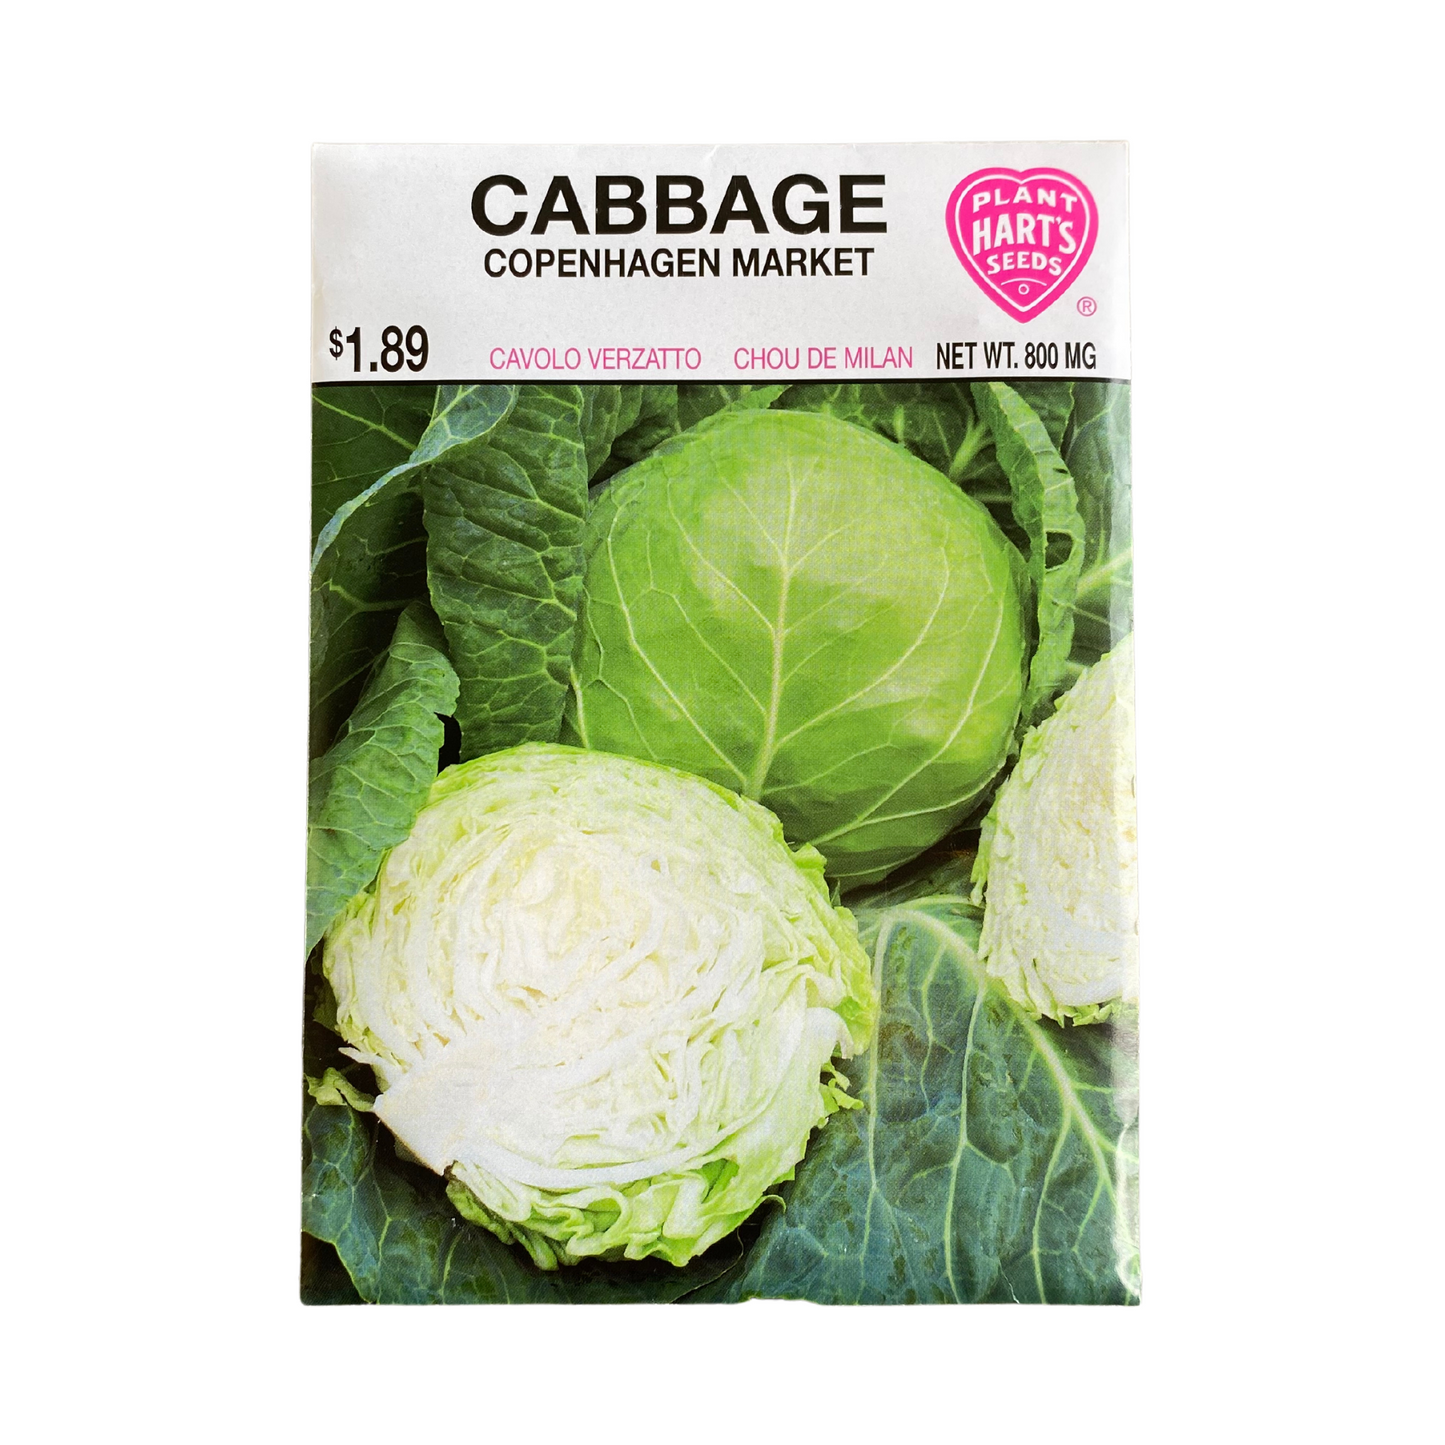 Cabbage Copenhagen